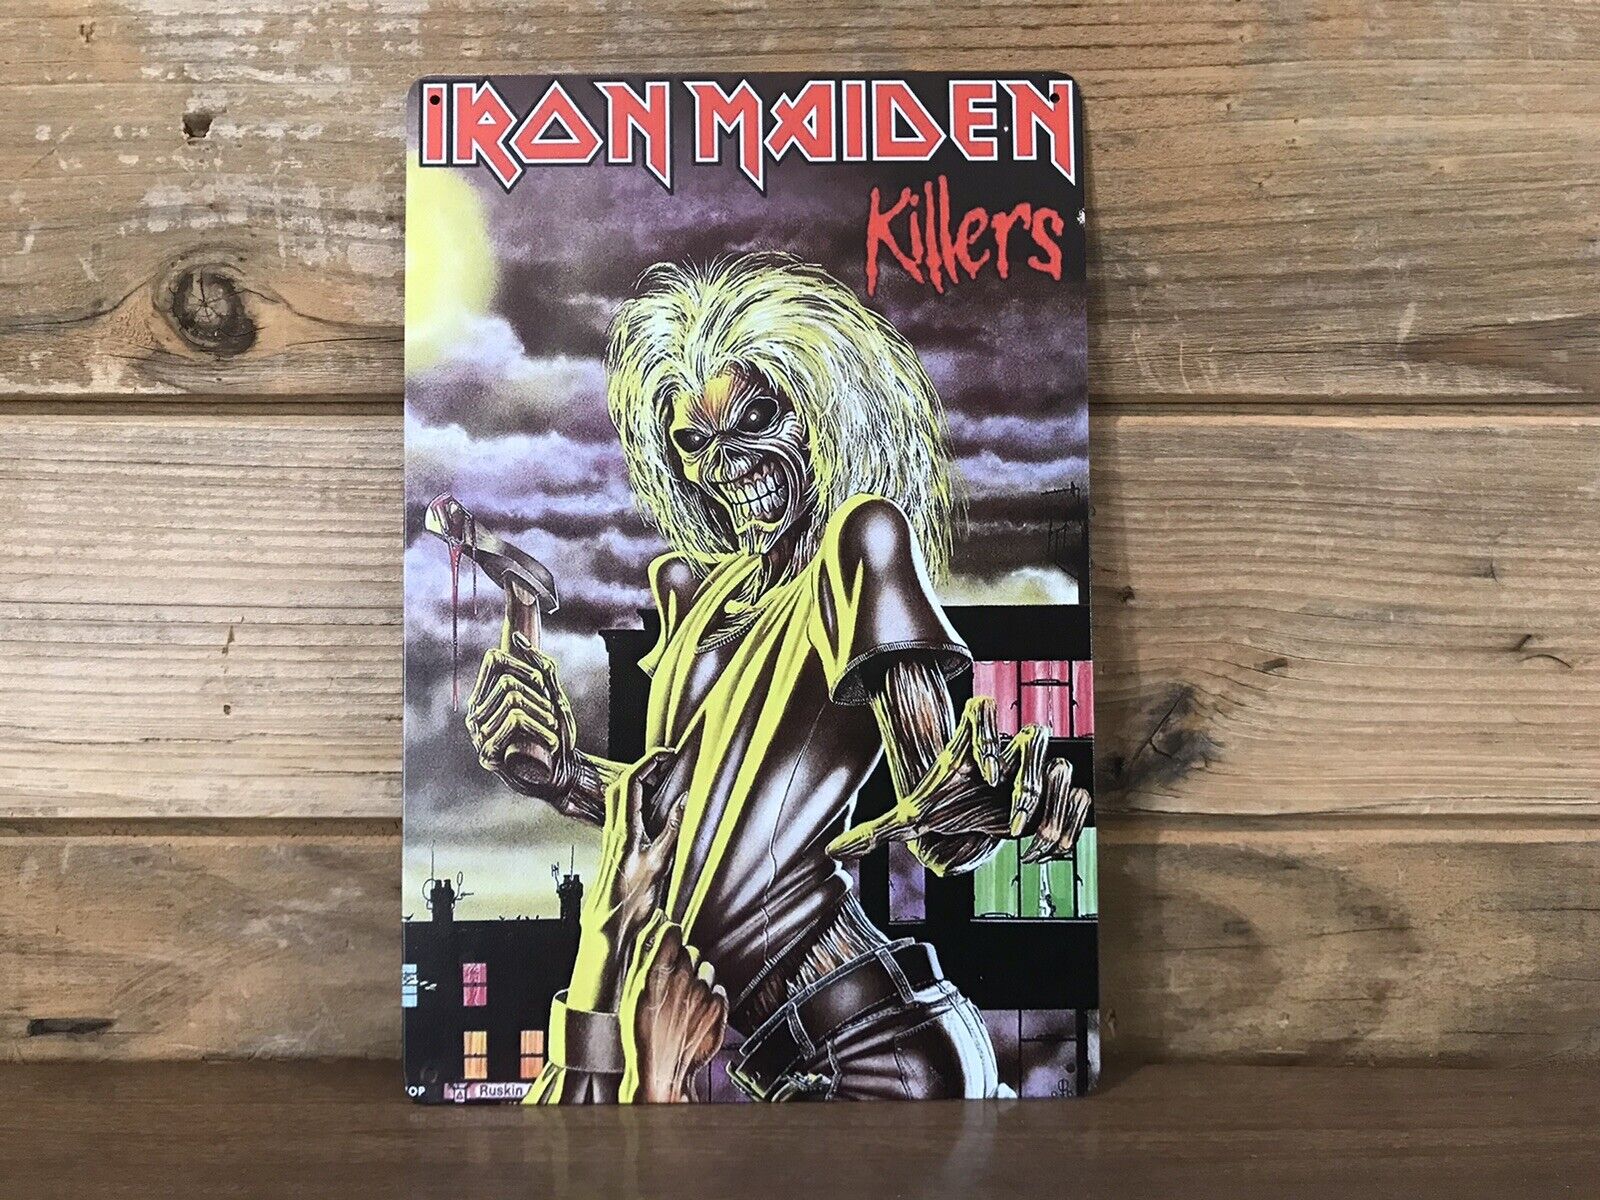 Iron Maiden Killers Reproduction Tin Metal Sign 8"x12" Man-cave Décor